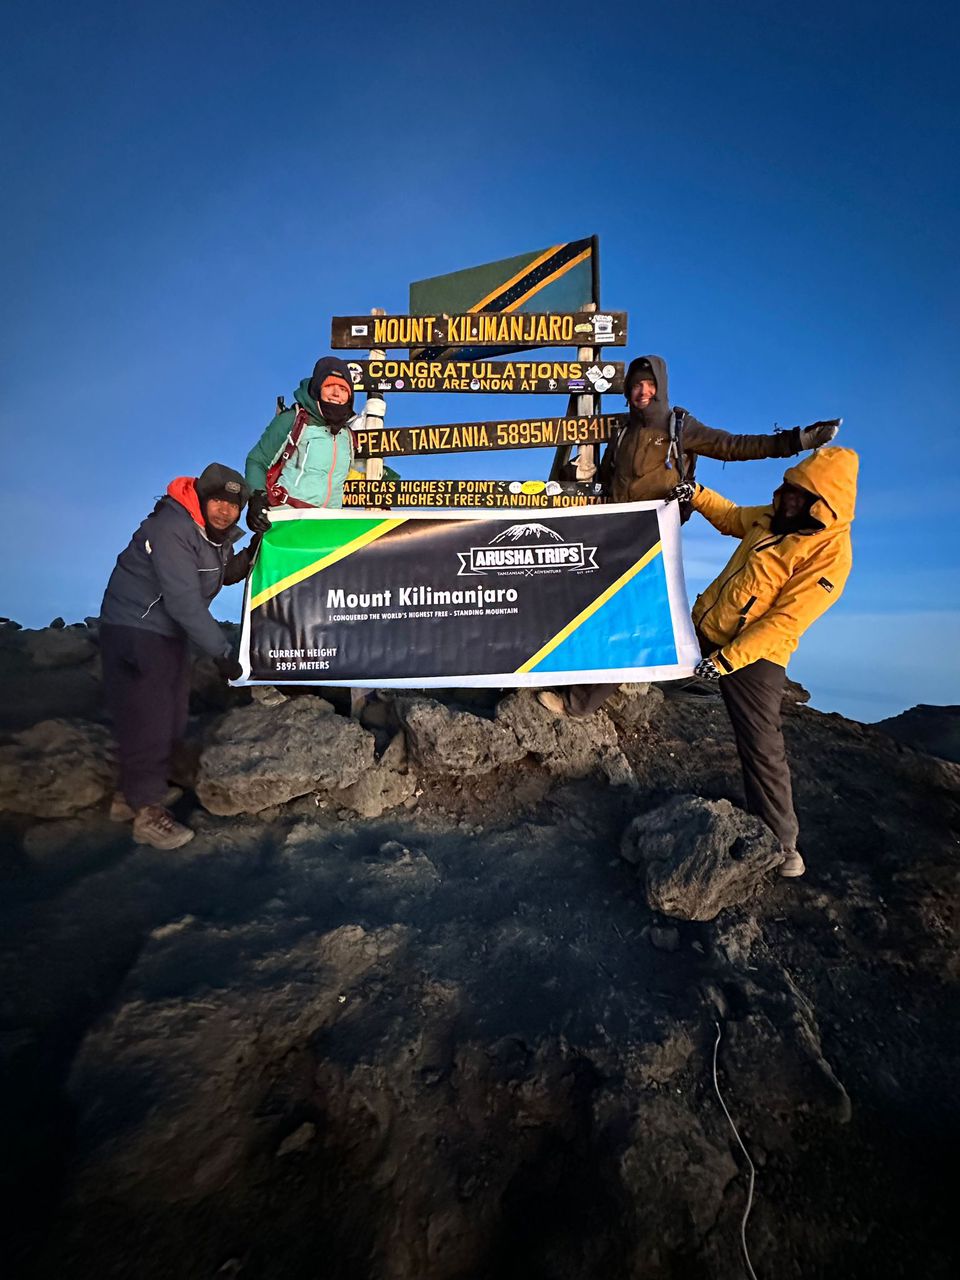 Uhuru Peak Kilimanjaro Climbing Arusha Trips